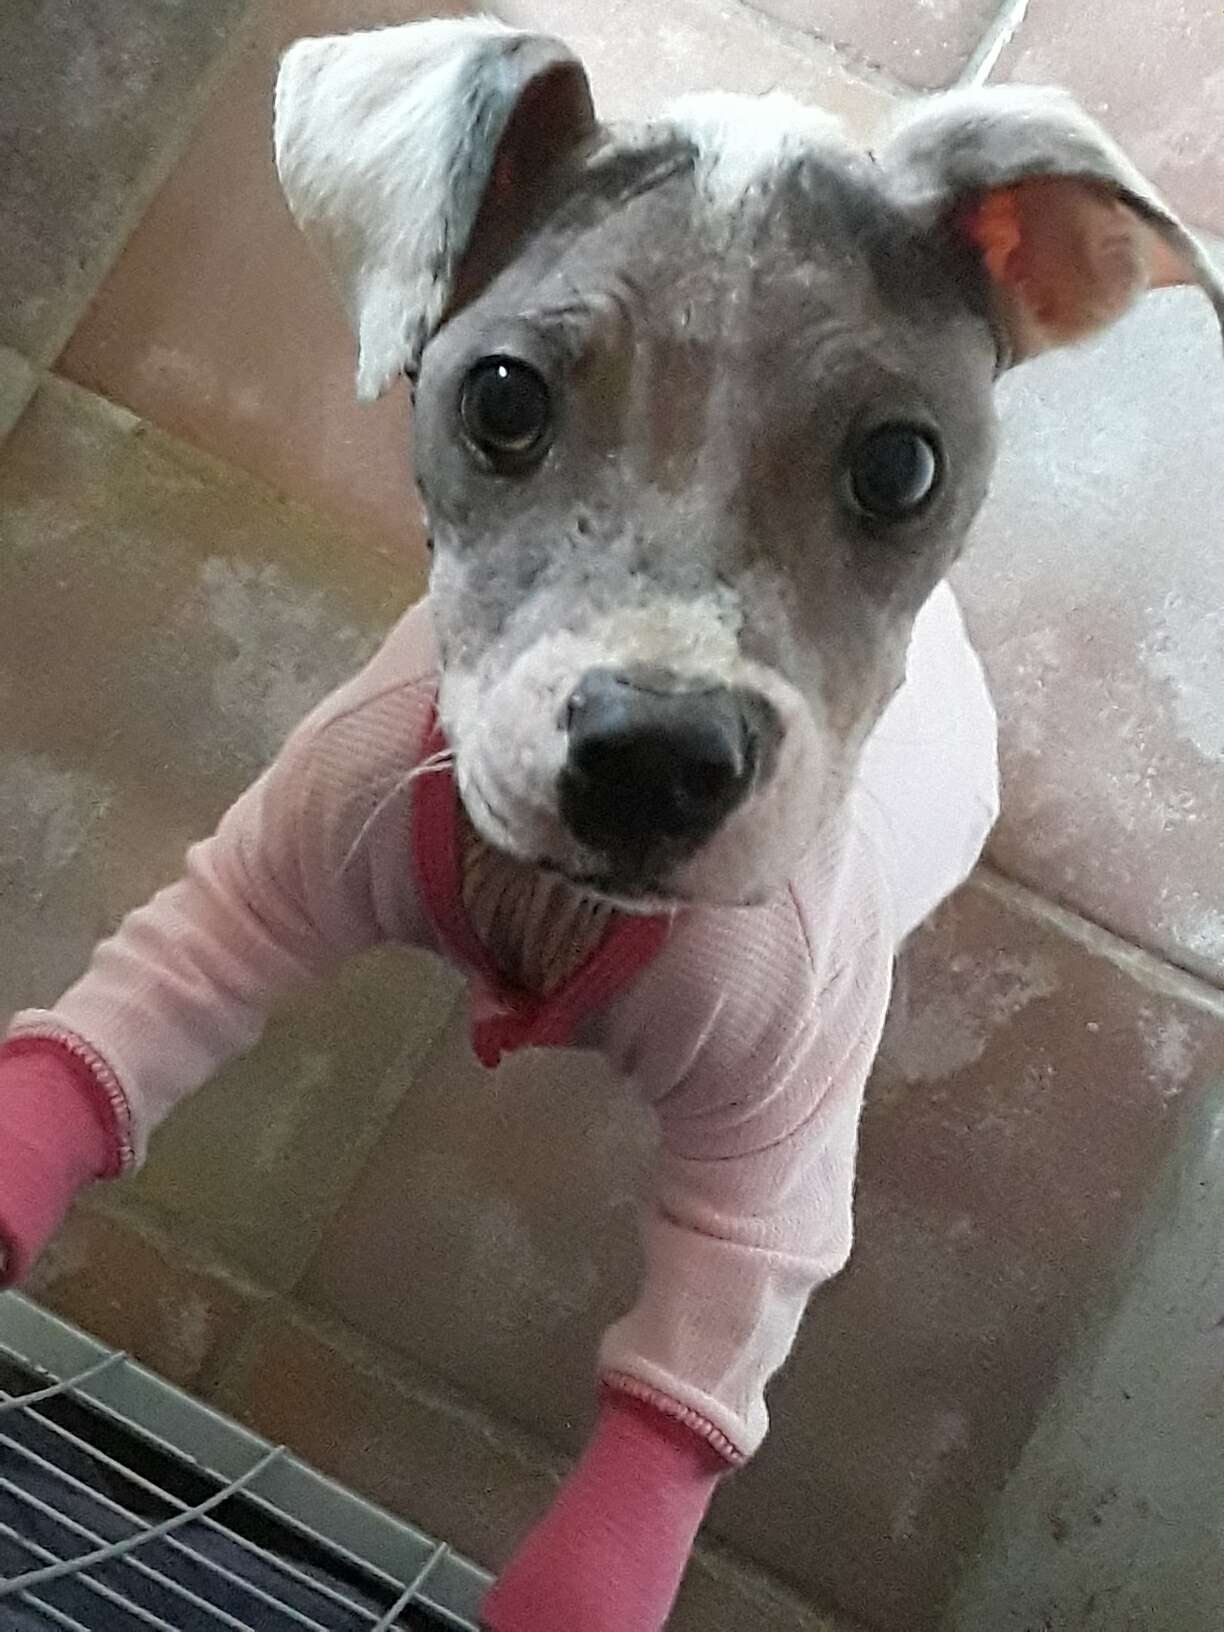 Dog with onesie on